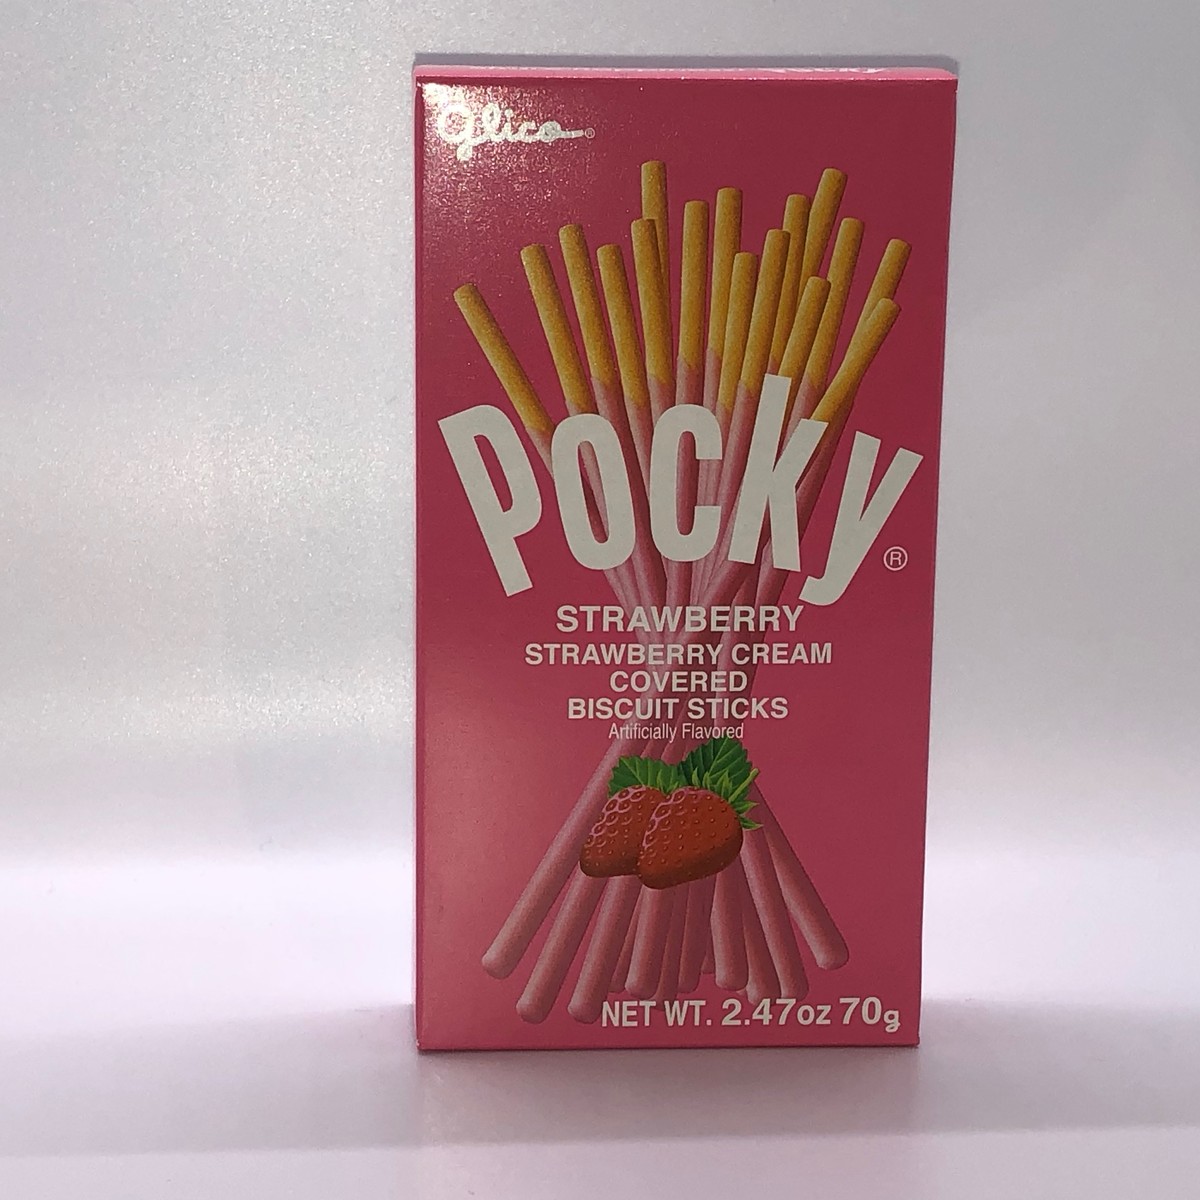 Shock Tarts - Wonka Brand : r/nostalgia